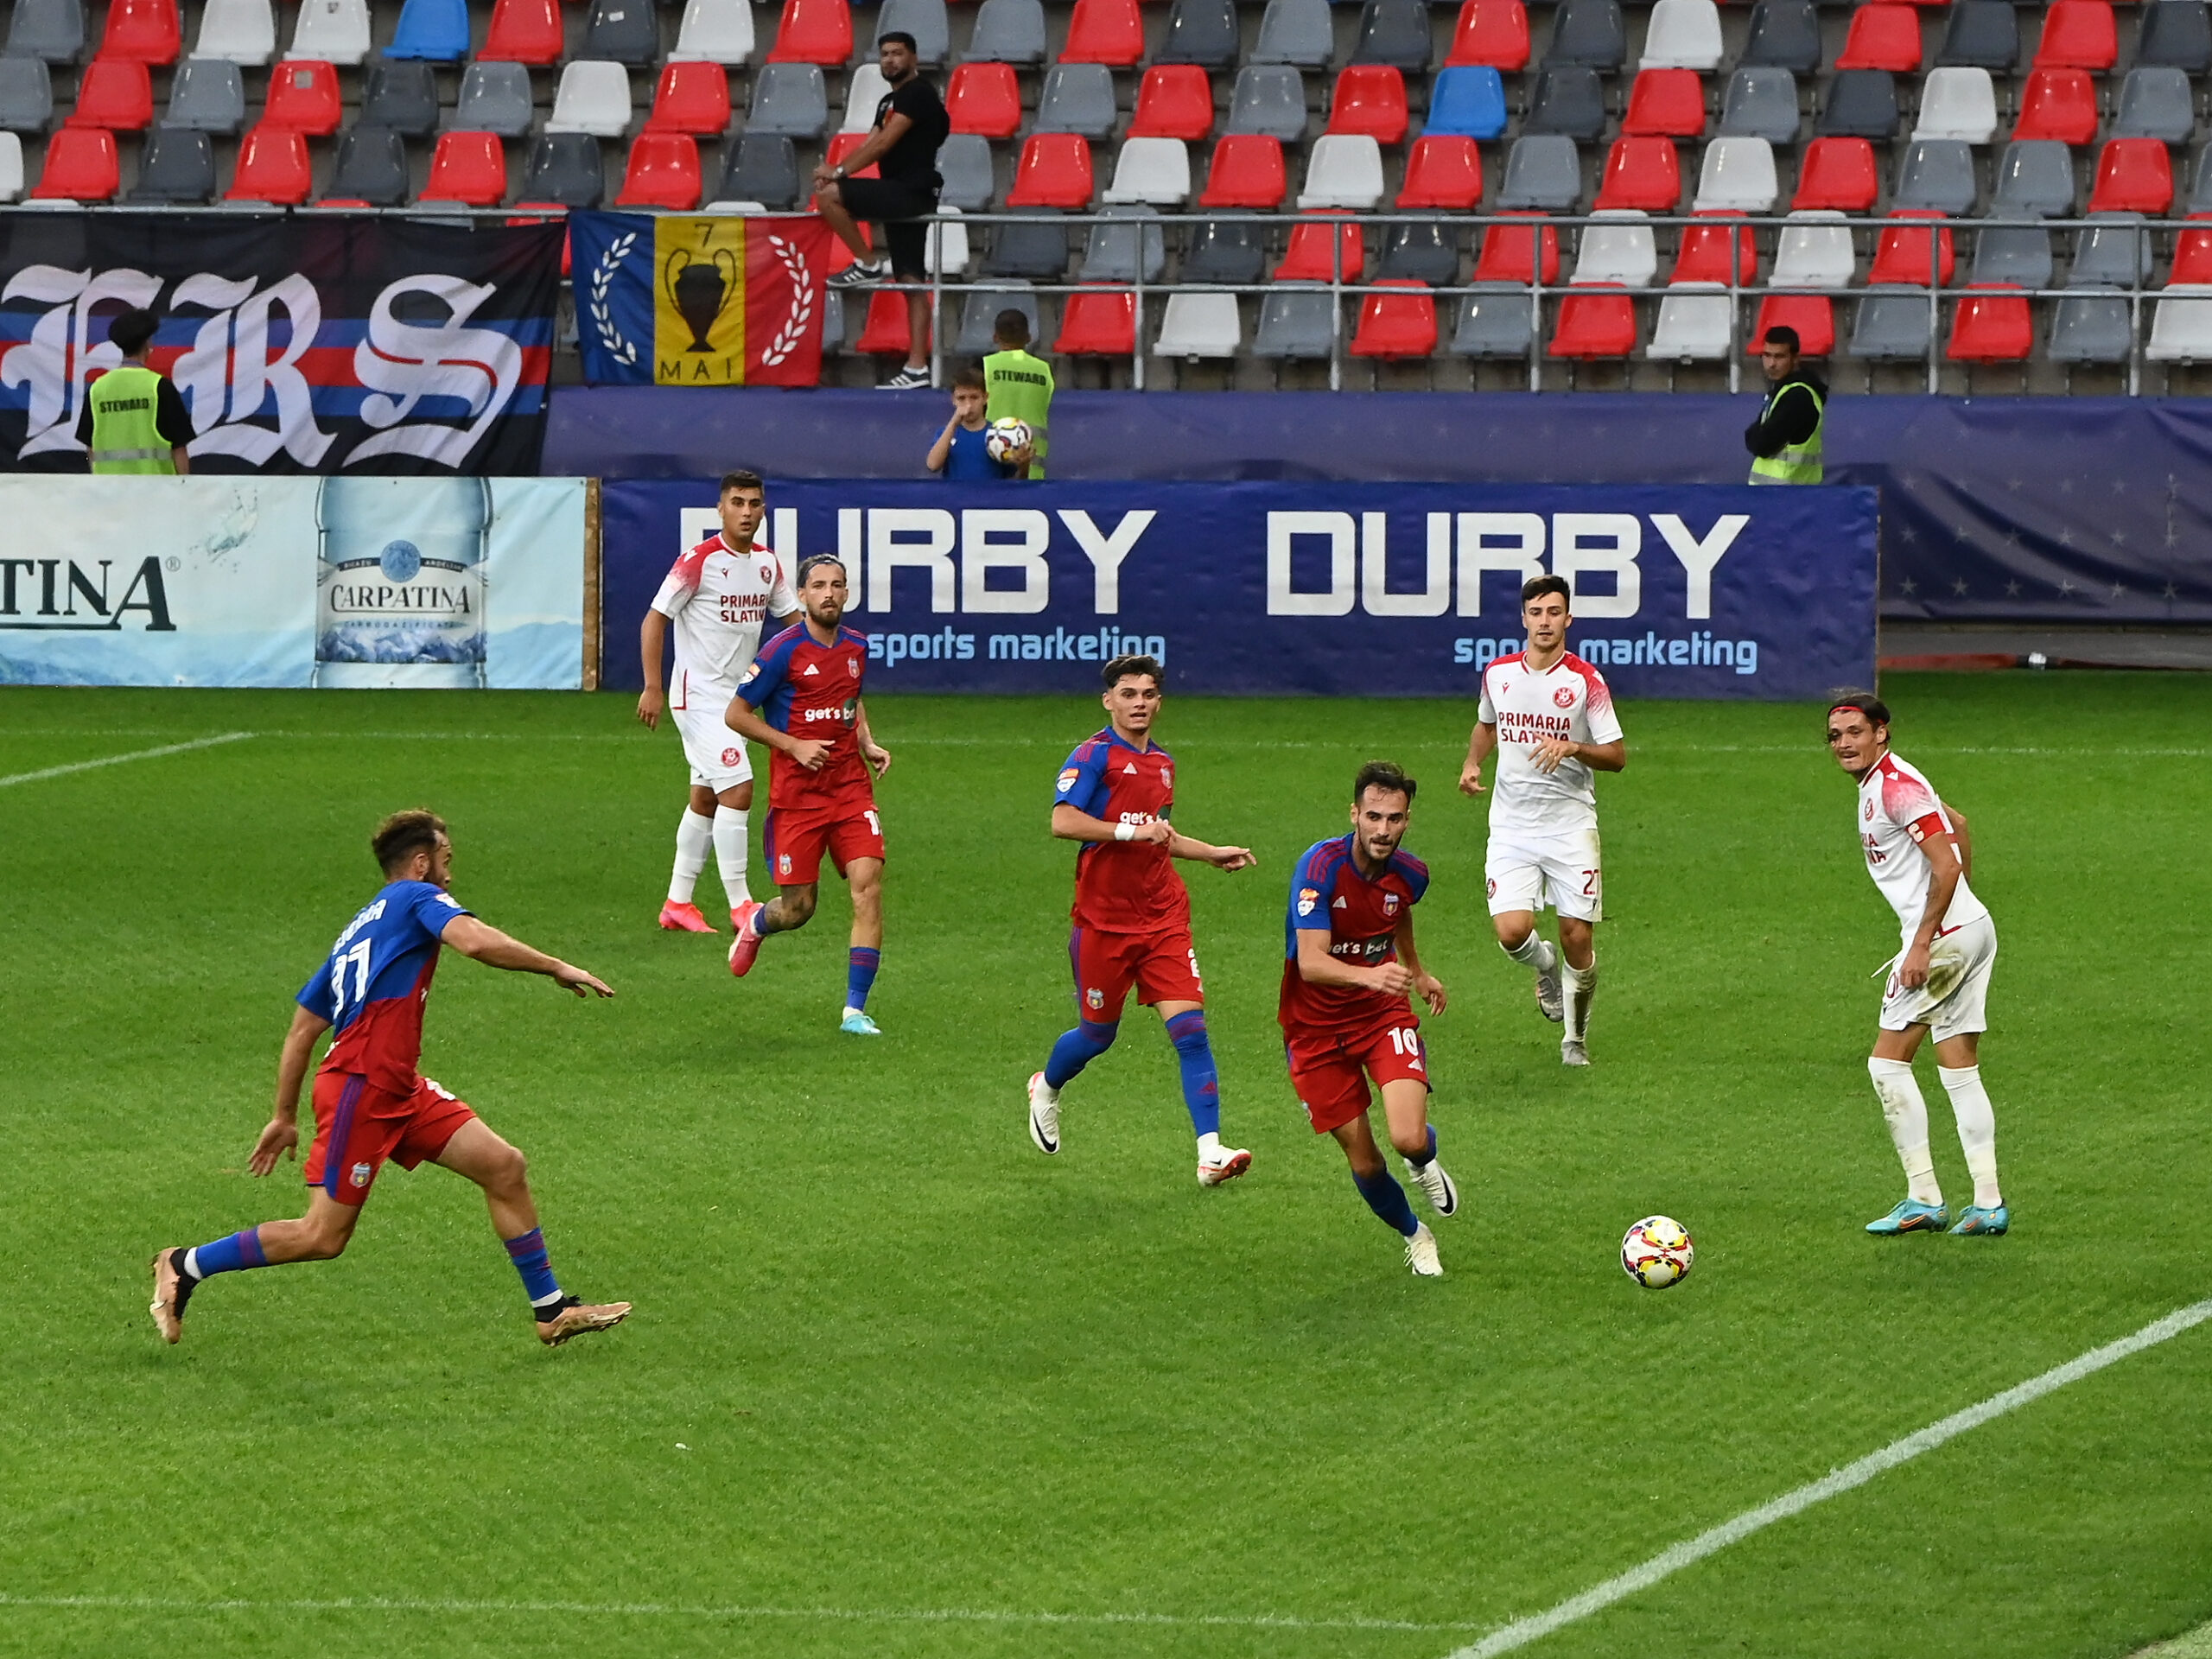 Liga 2: Steaua vs CSM Slatina - Miza pe echipa Armatei - HotNews.ro